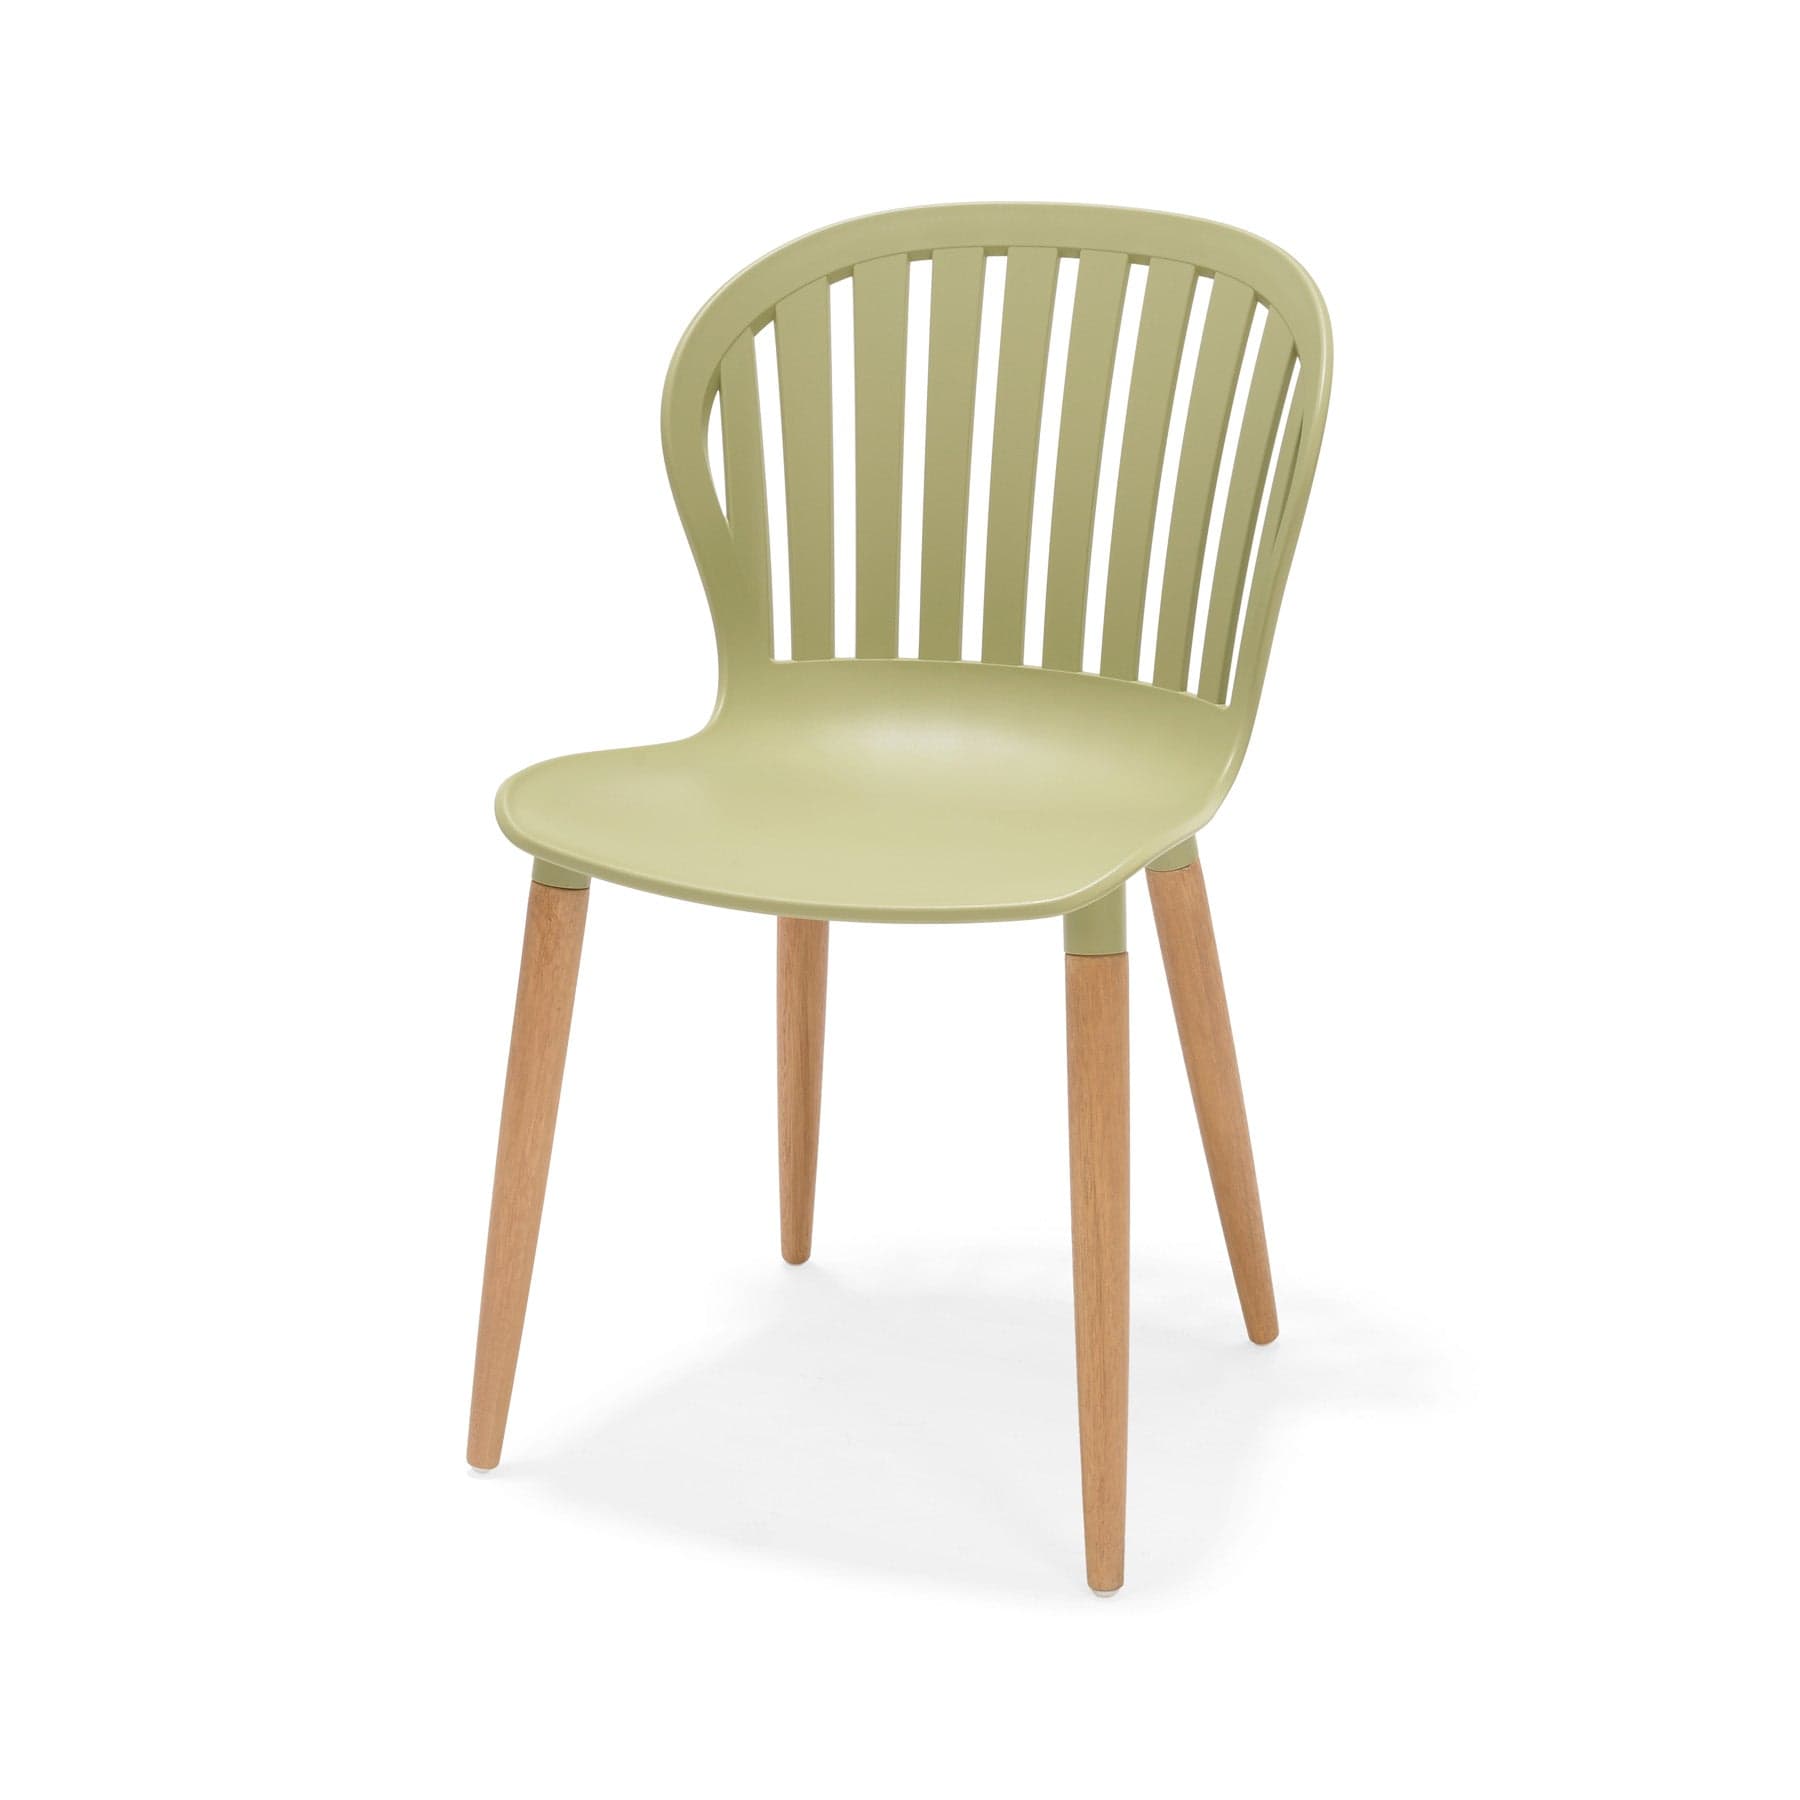 Social Plastic® nassau side chairs set of 2